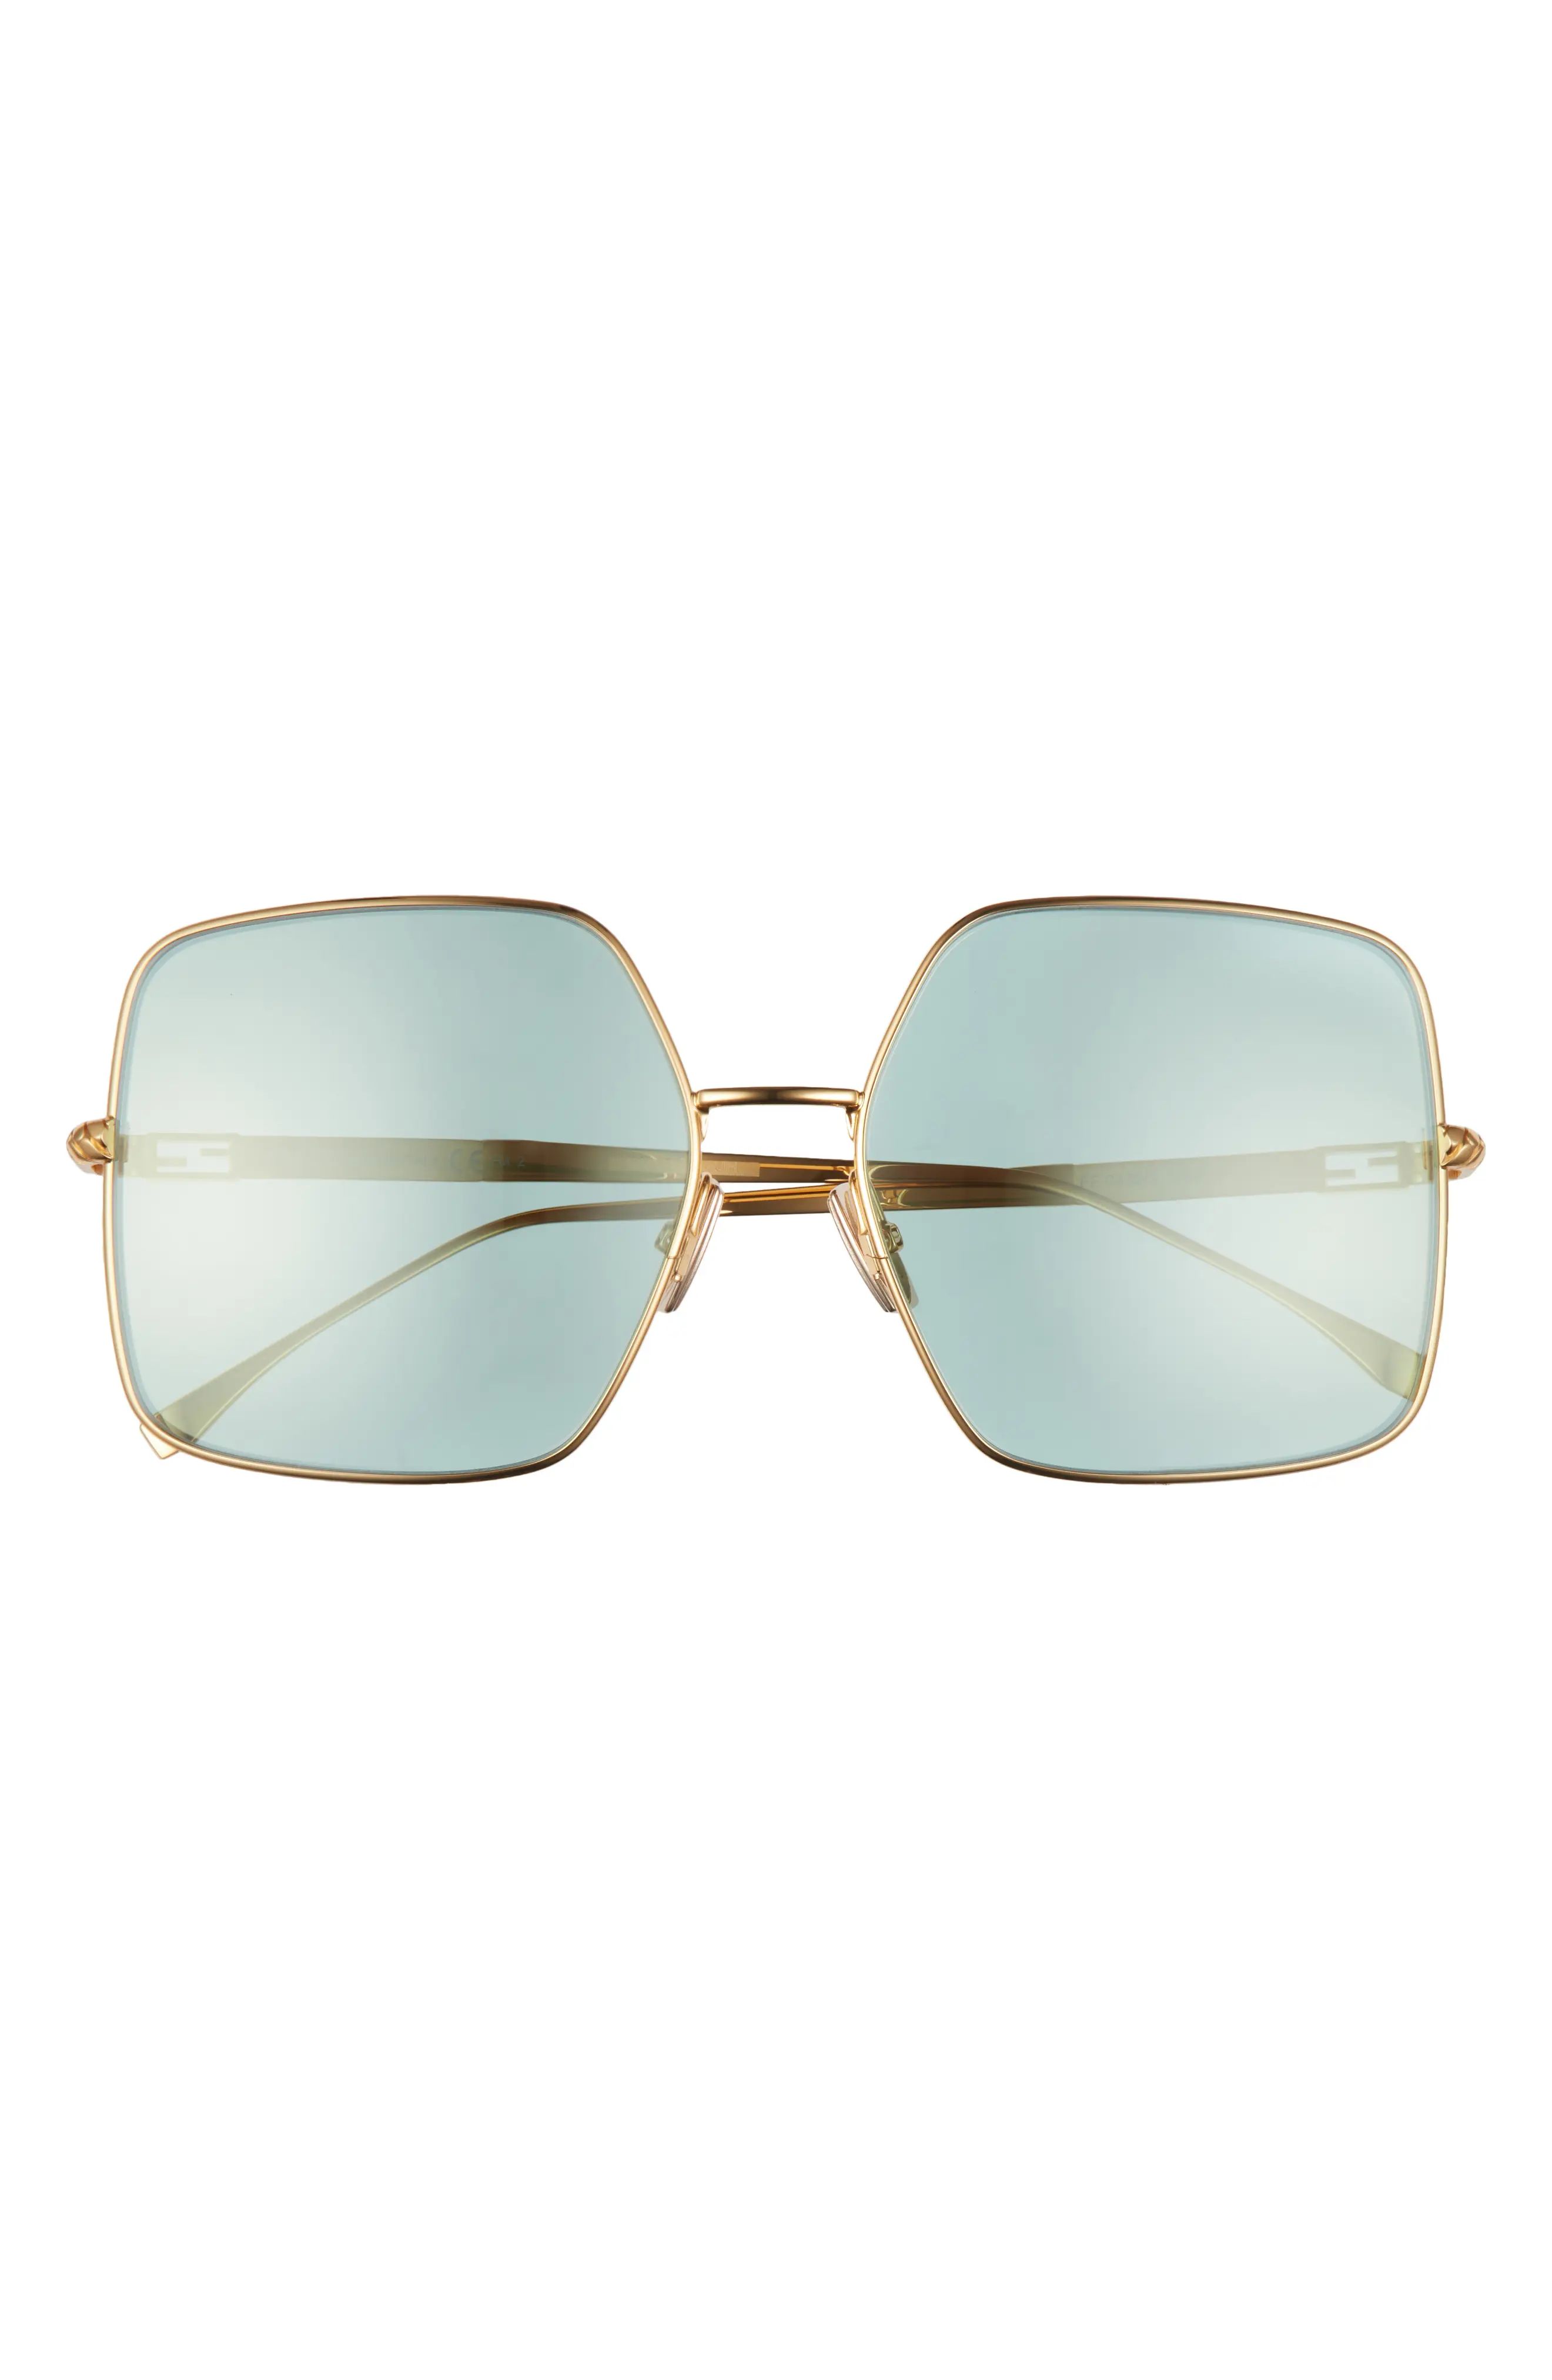 Women's Fendi 61mm Mirrored Square Sunglasses - Gold/ Green Antireflective | Nordstrom